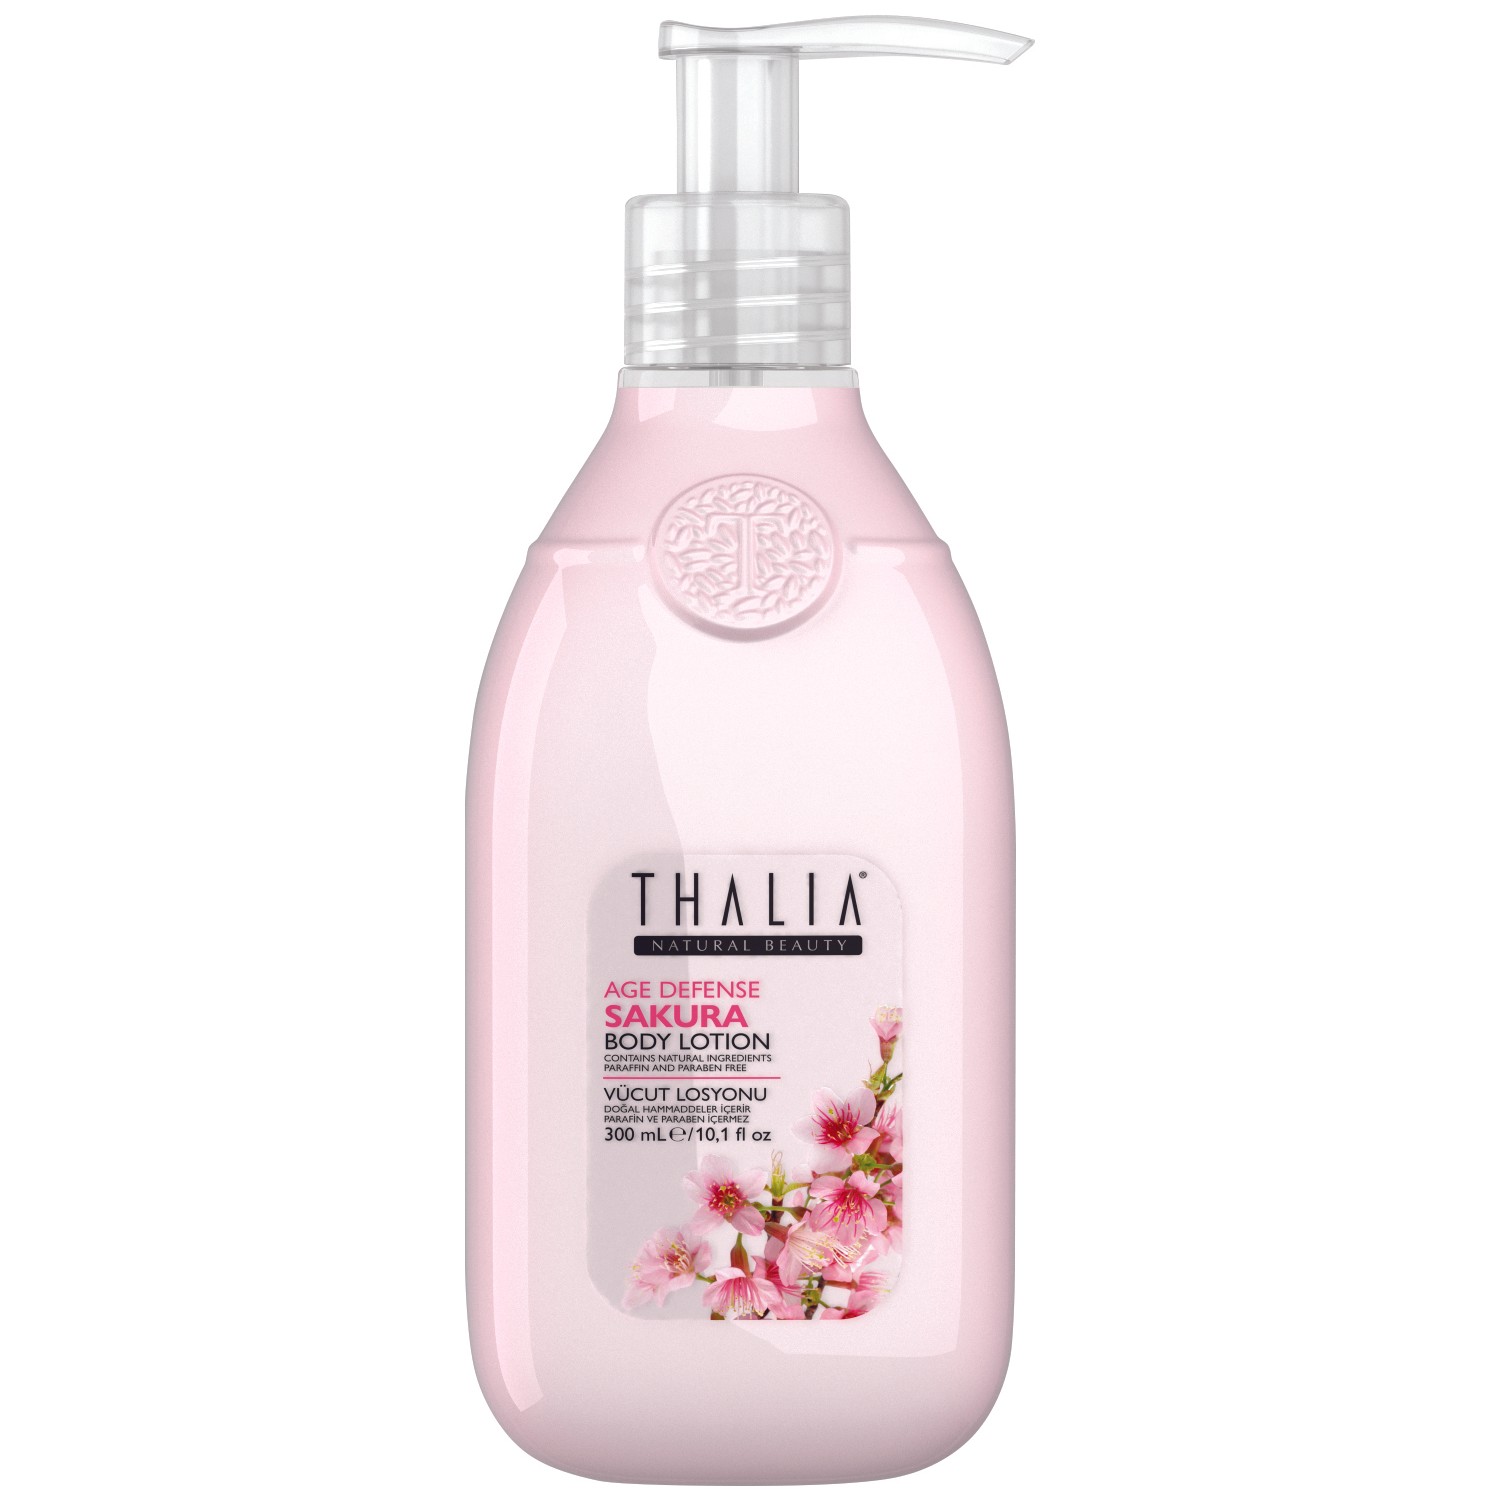 Лосьон для тела Thalia Sakura Age Defense, 300 мл антивозрастное мыло с ароматом сакуры thalia natural beauty age defense sakura soap